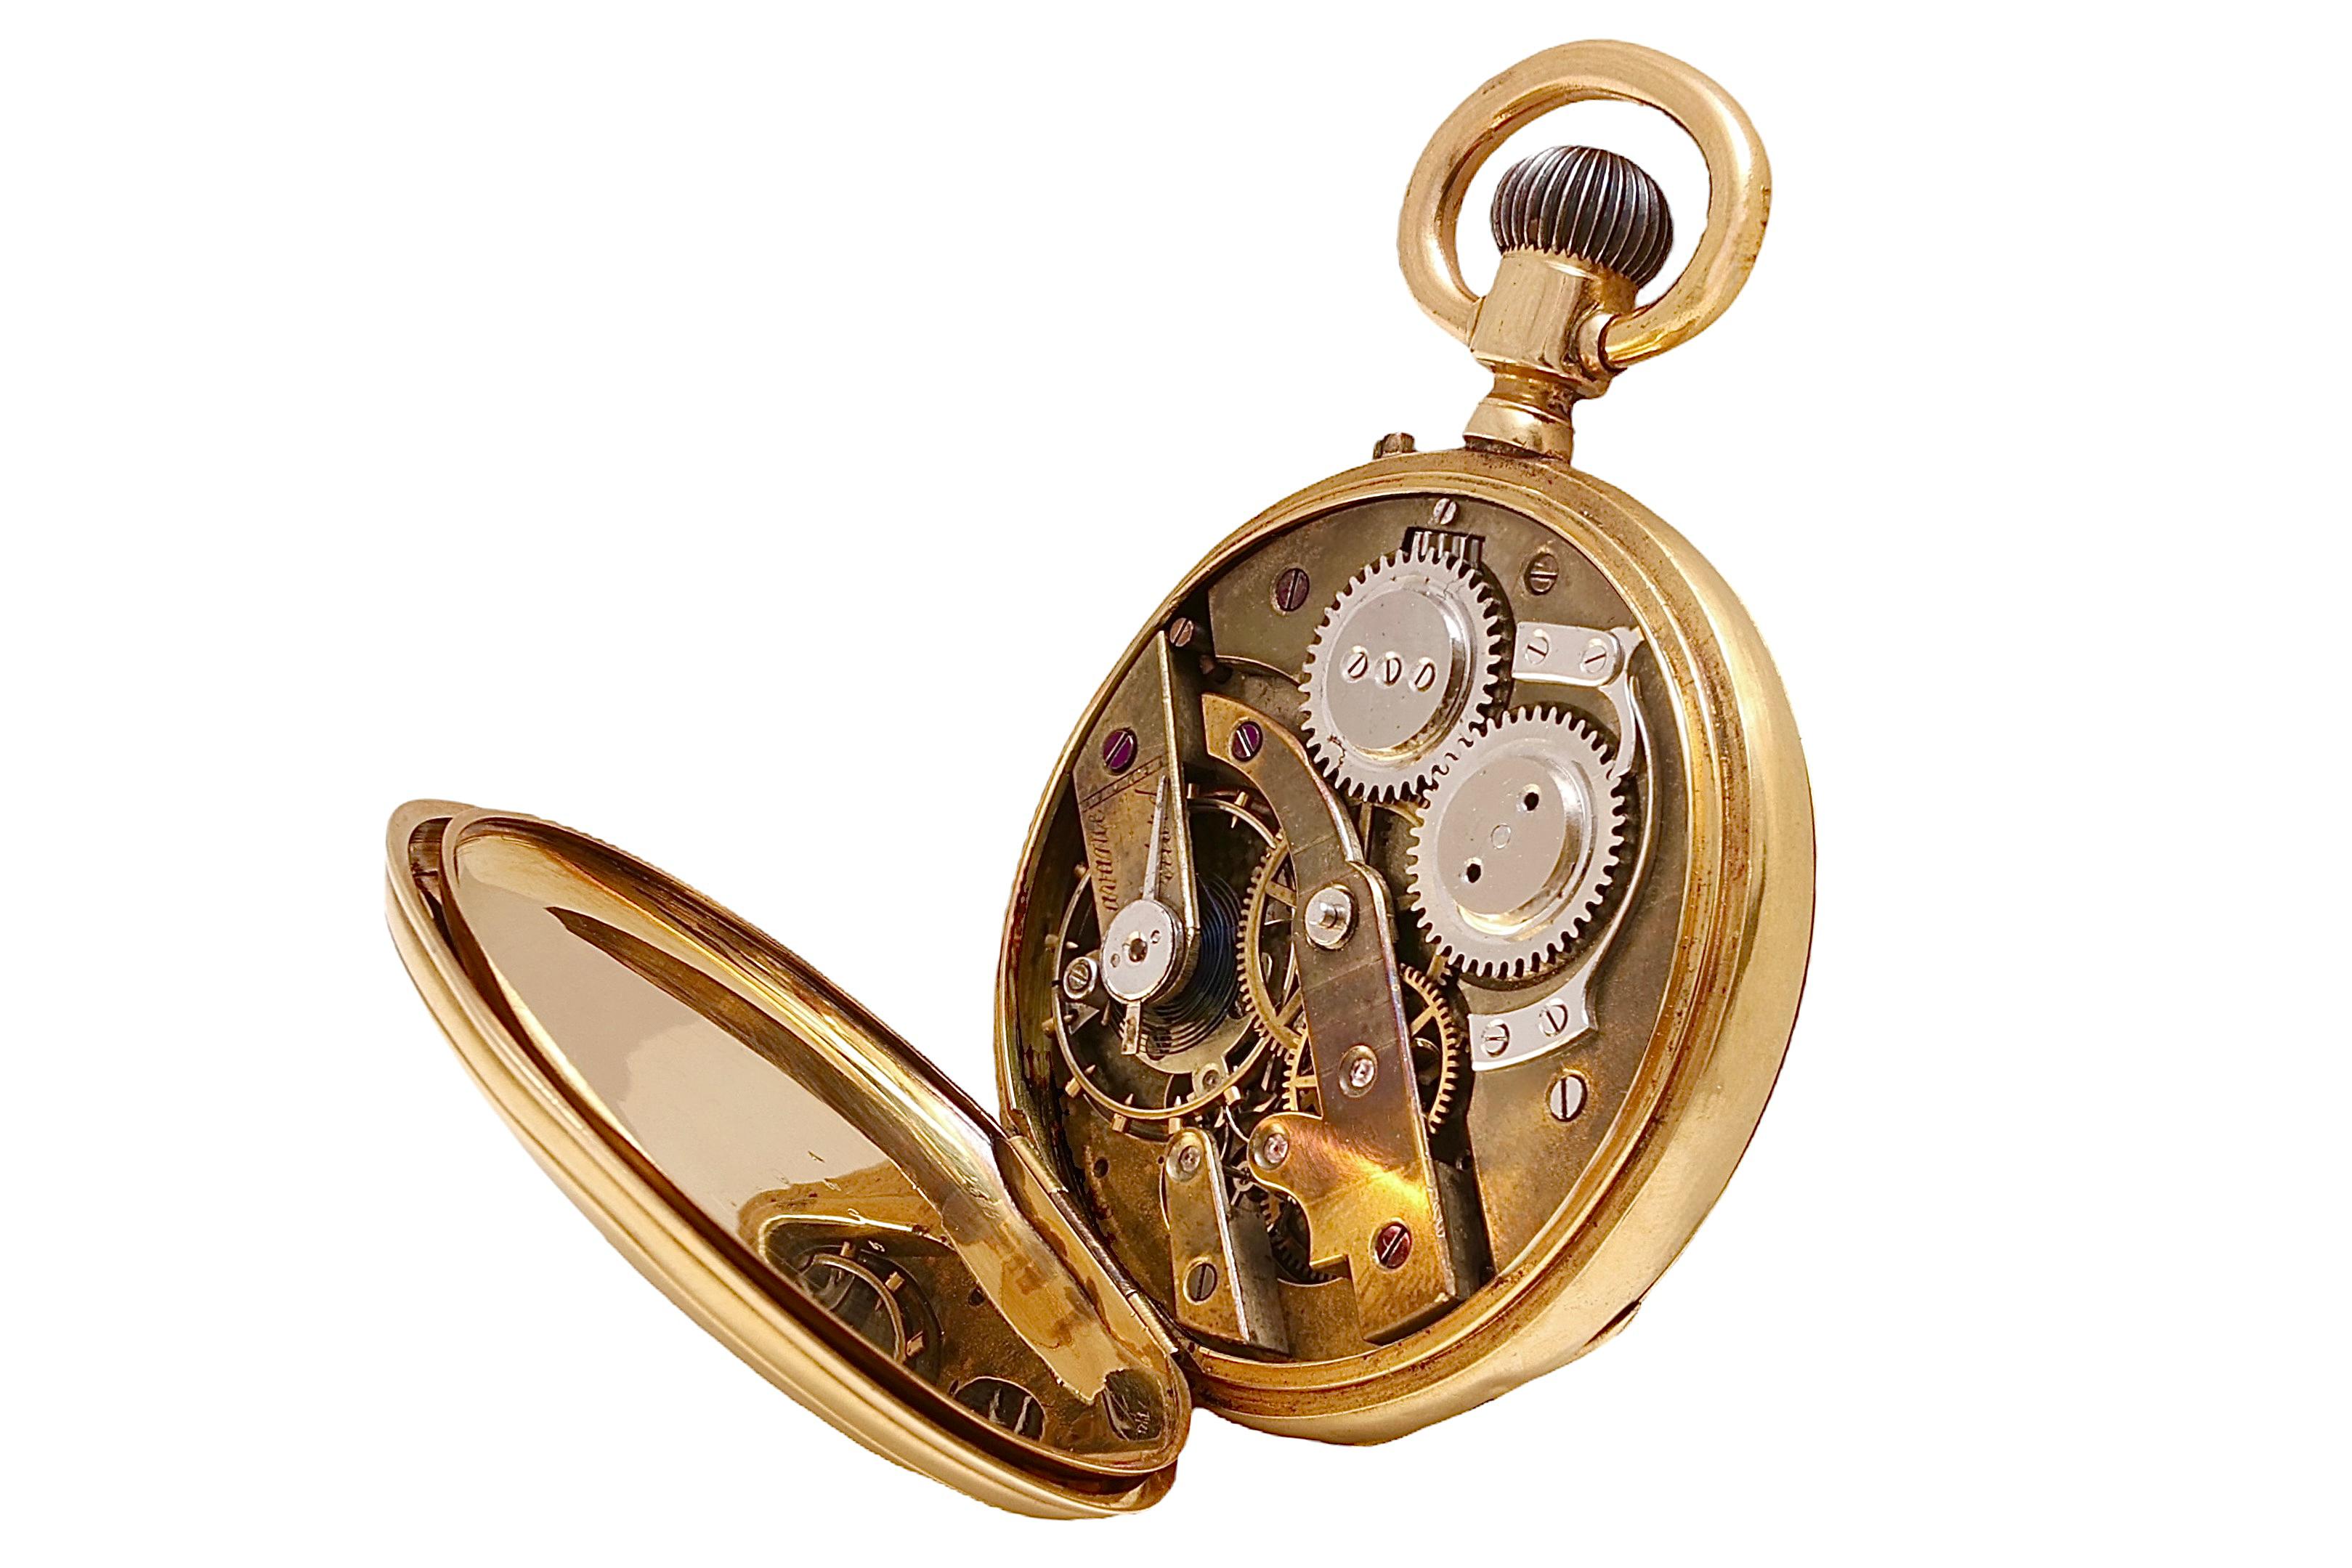 Artisan 18 Kt Solid Gold Pateck Geneve Spiral Breguet Open Face Pocket Watch For Sale